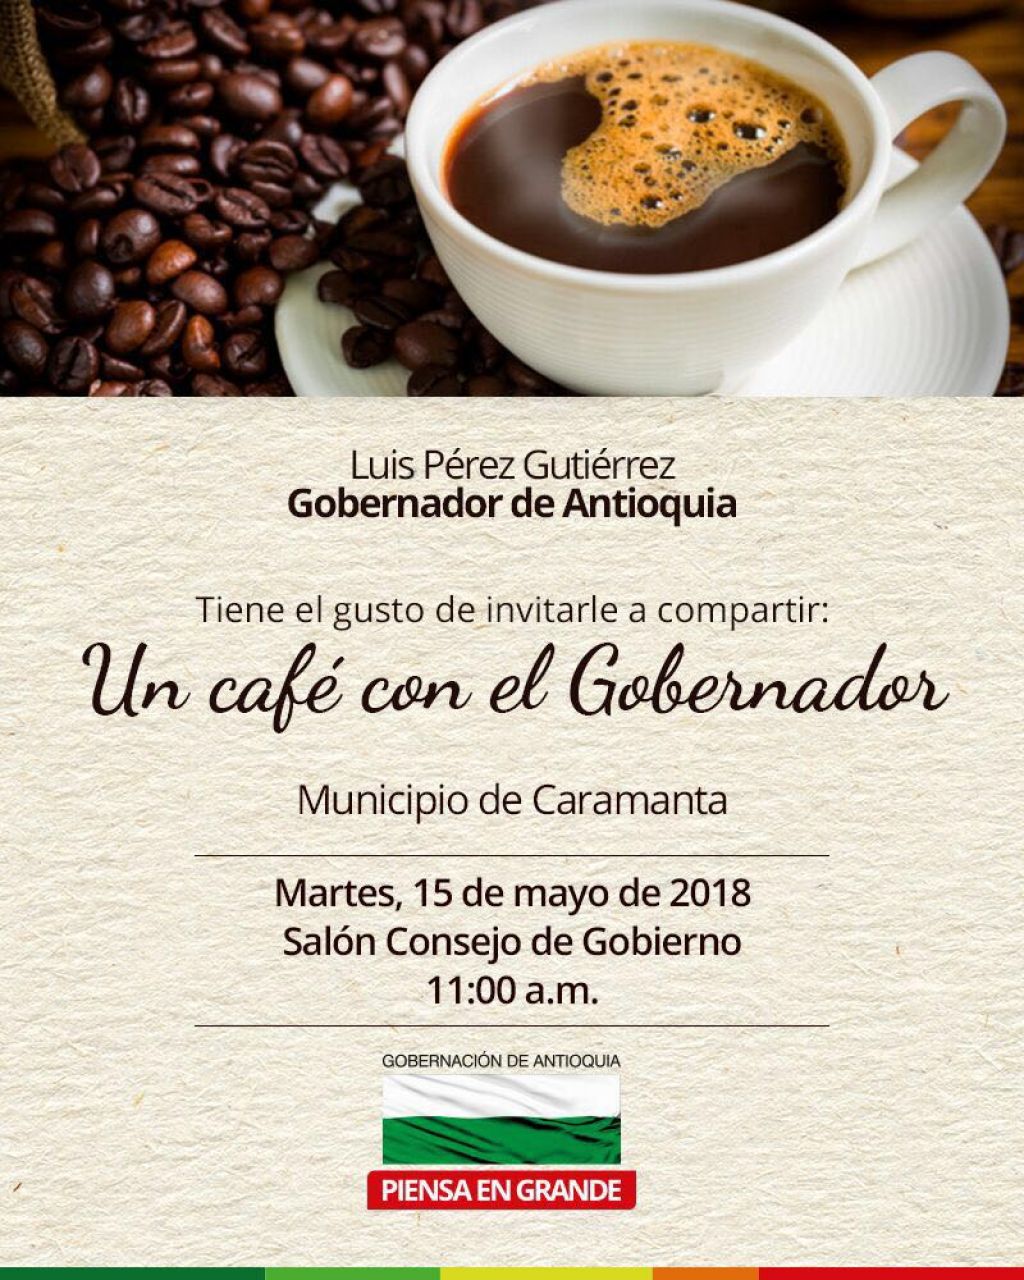 El Gobernador de Antioquia invita a Un Café con el Gobernador